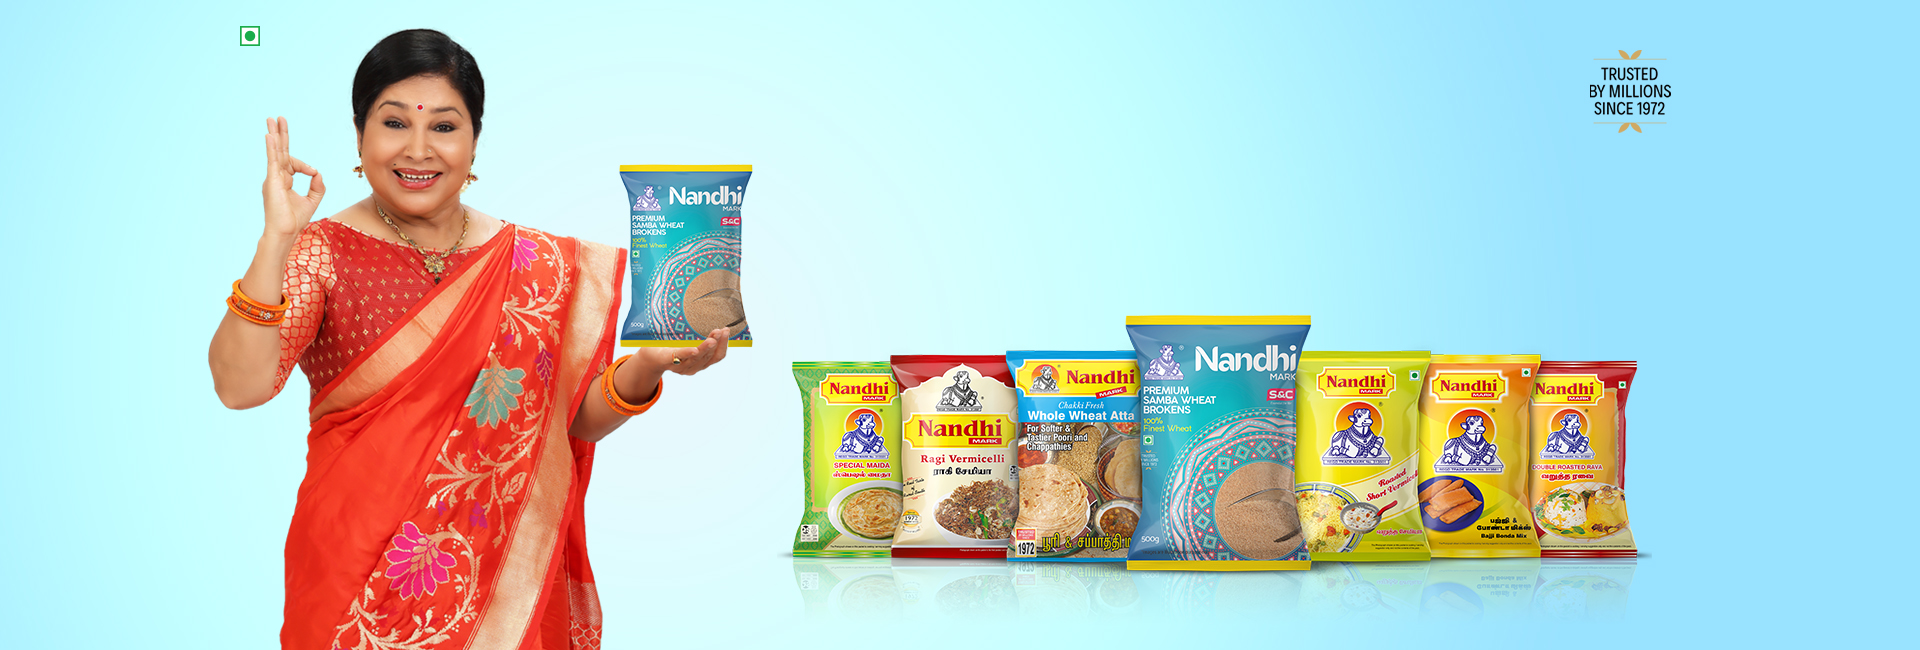 Nandhi Mark Samba Ravai Coimbatore | Food Products Manufacturing ...